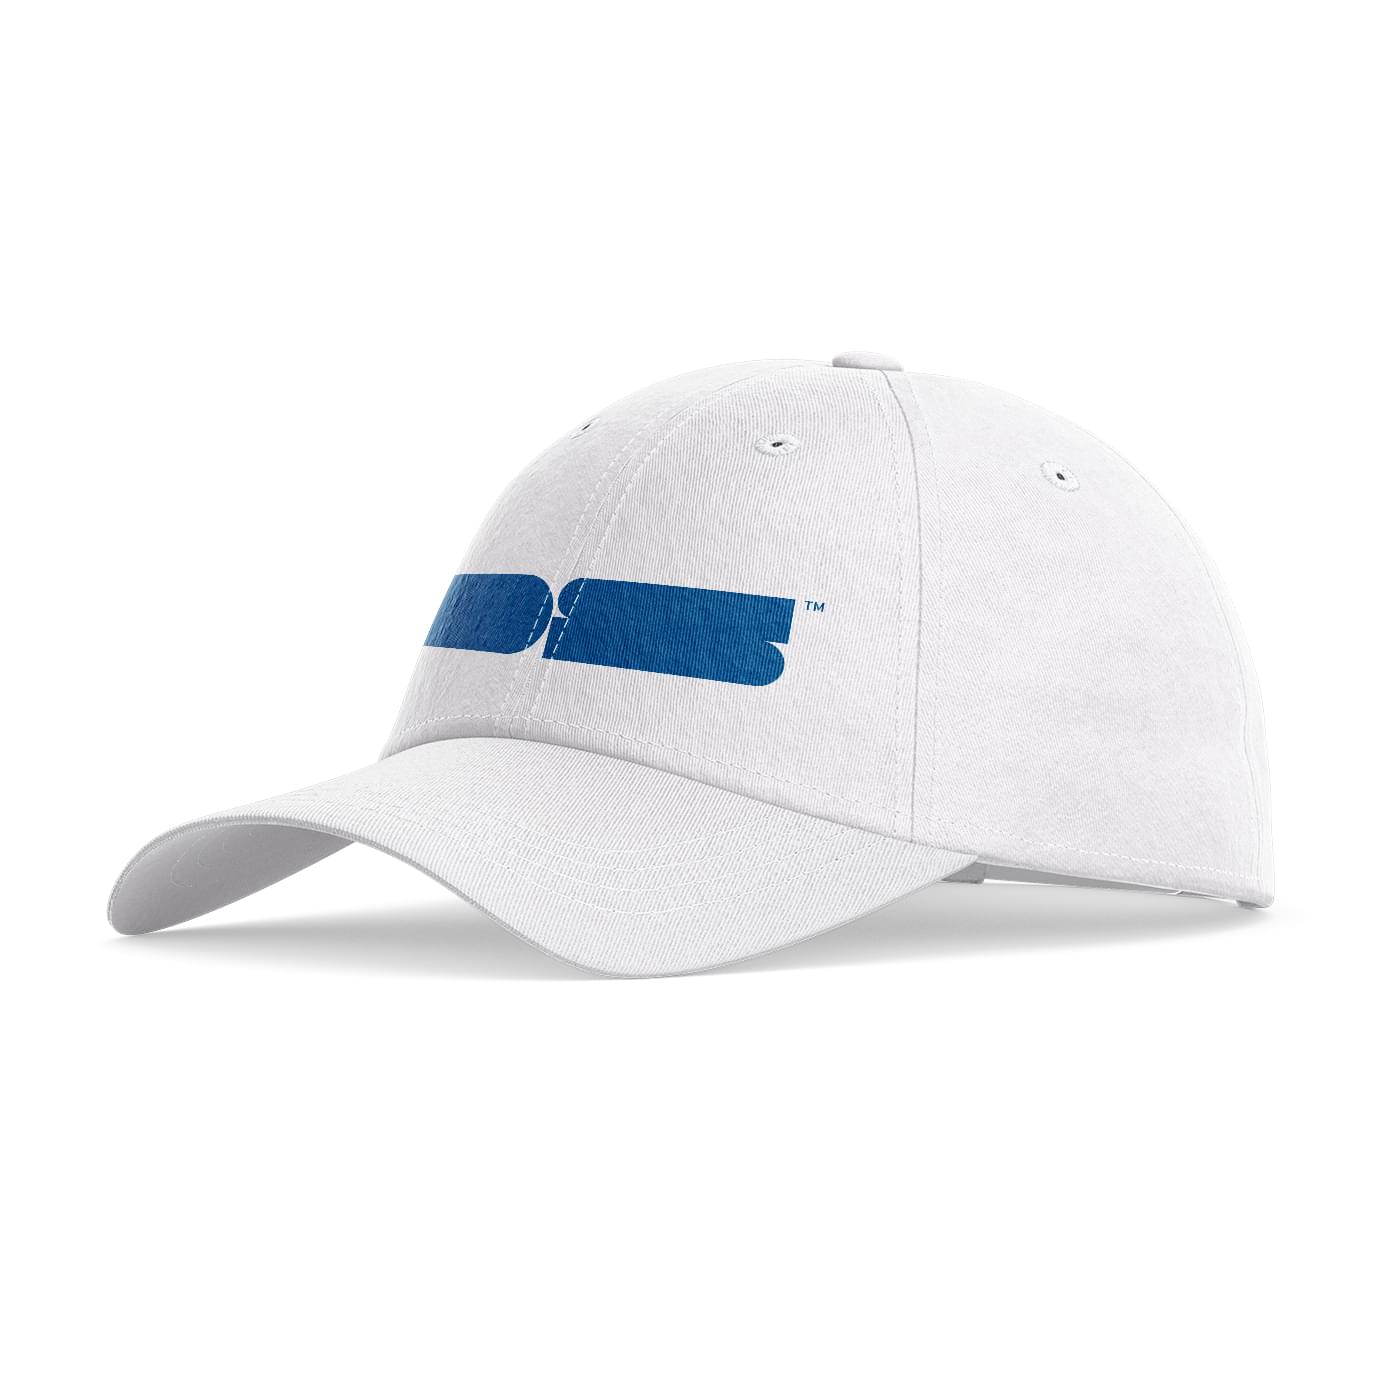 Branded baseball cap for Daniel Sanchez' personal training business